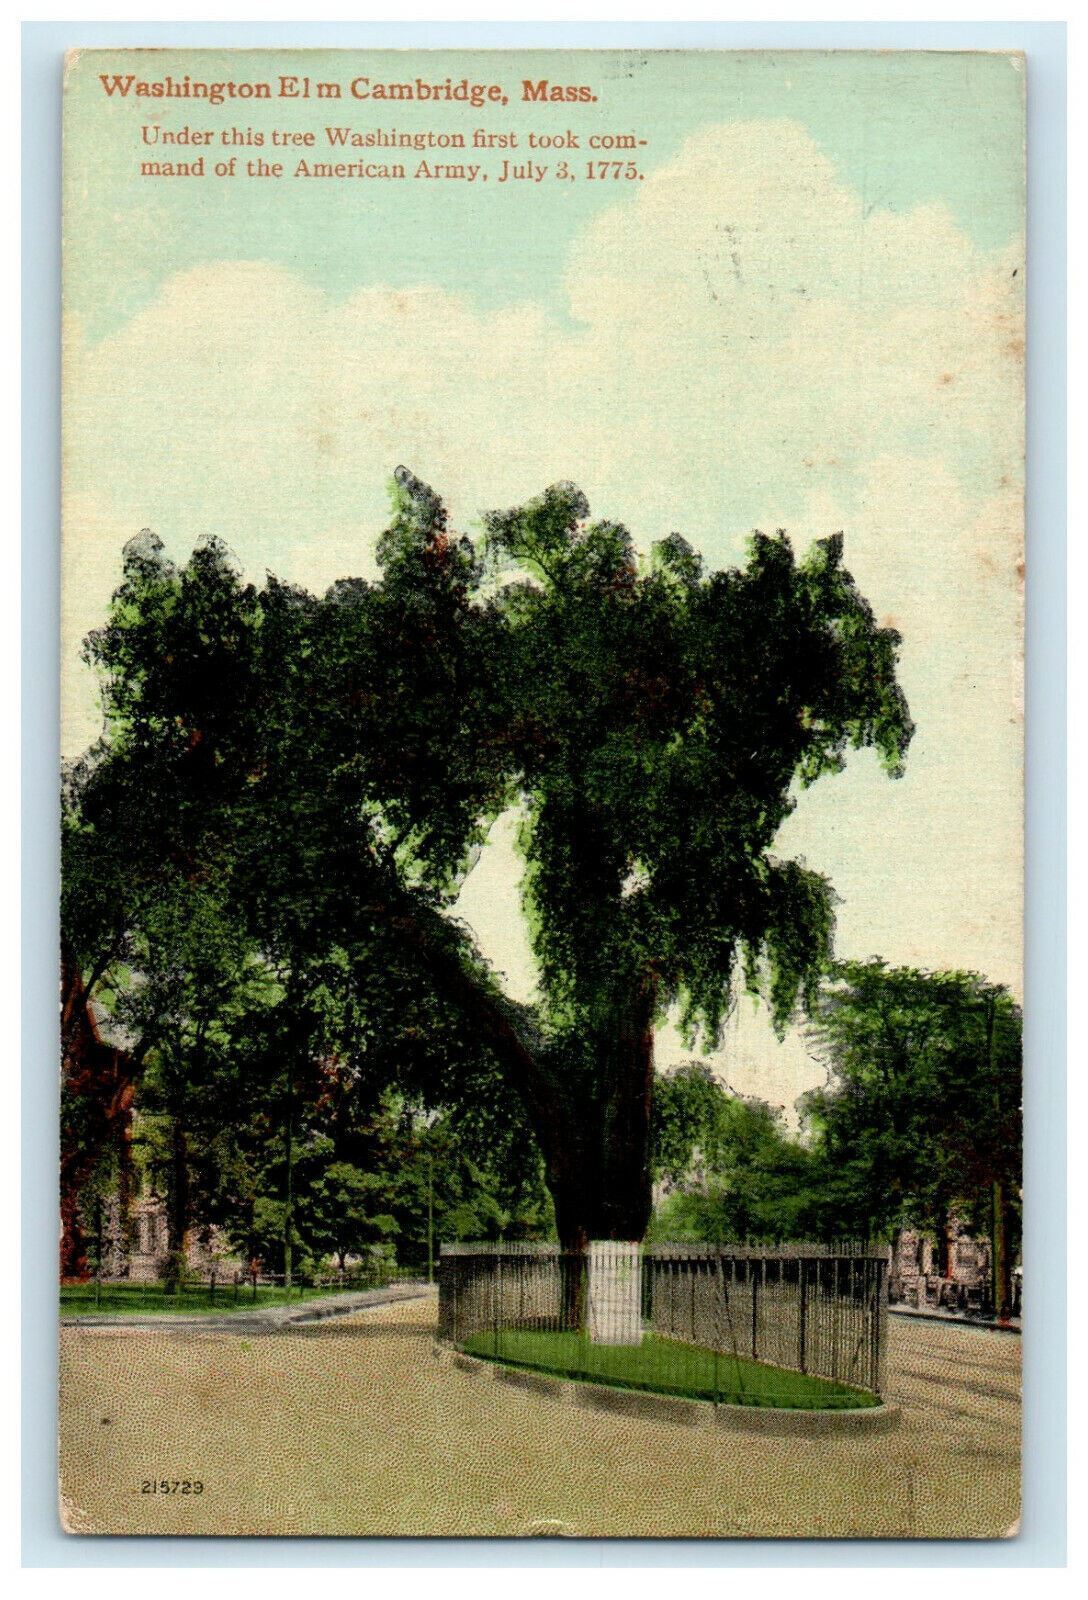 1912 Washington Commands Army Here in 1775, Elm, Cambridge MA Cancel Postcard